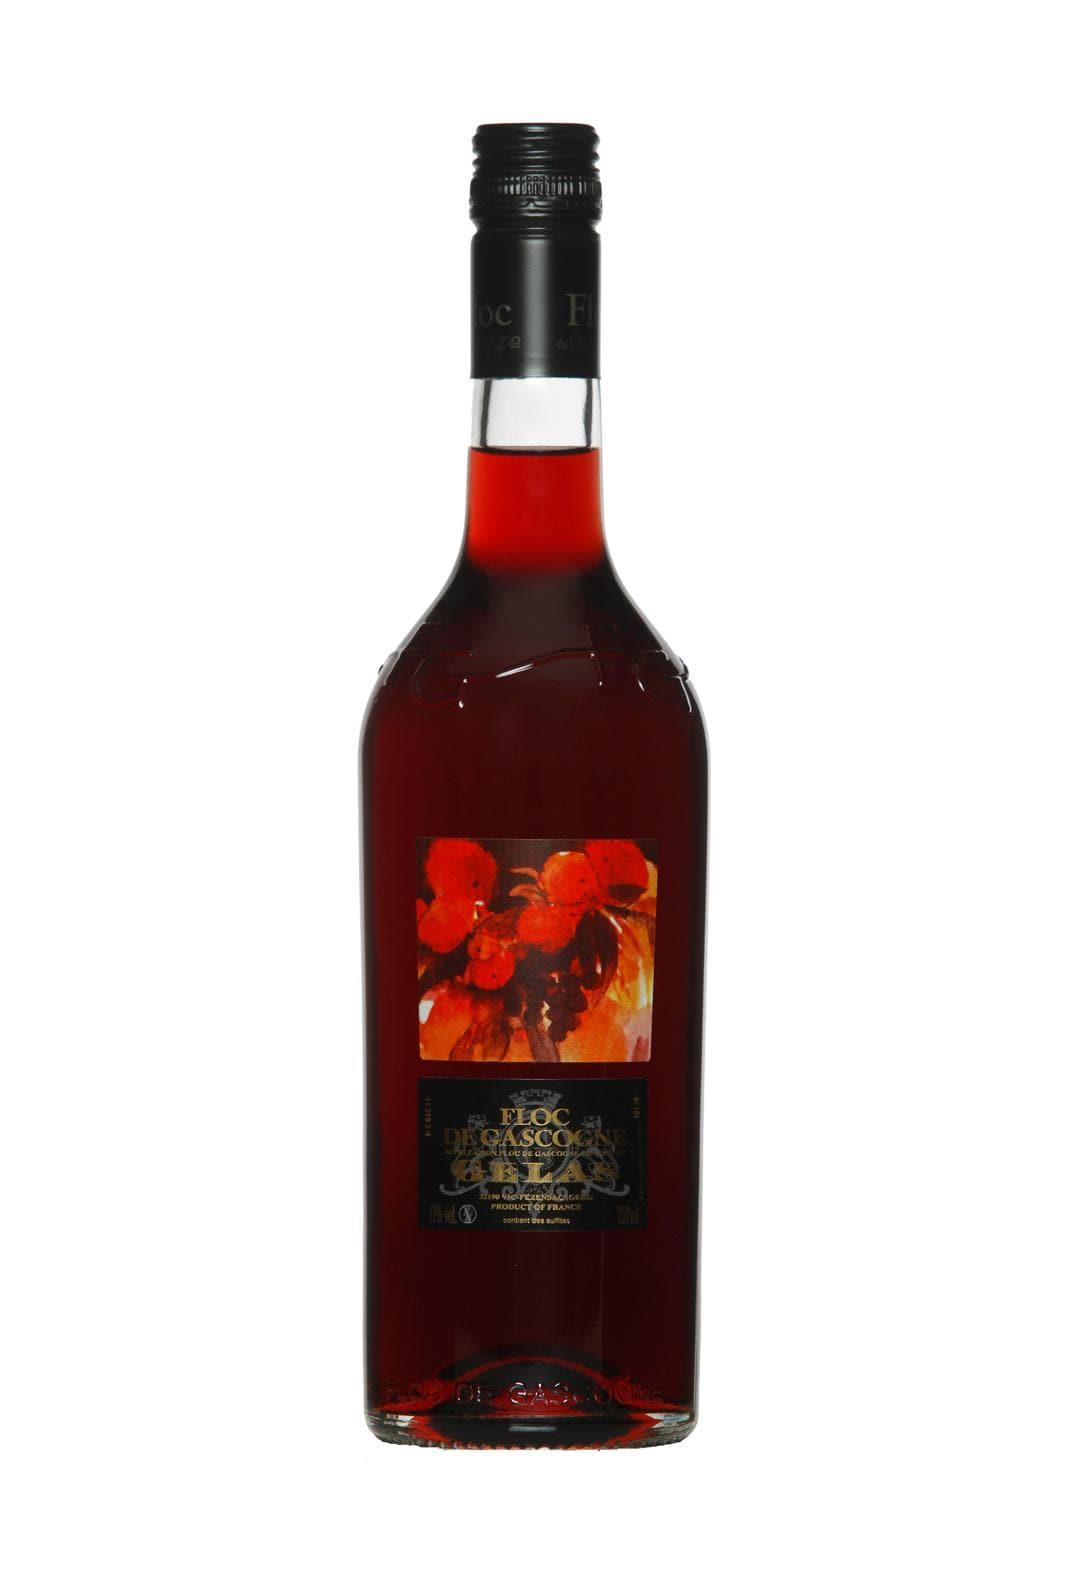 Gelas Floc de Gascogne Rose (Pink Mistelle) (Armagnac + Fresh red grape juice) 750ml 17% | Liquor & Spirits | Shop online at Spirits of France